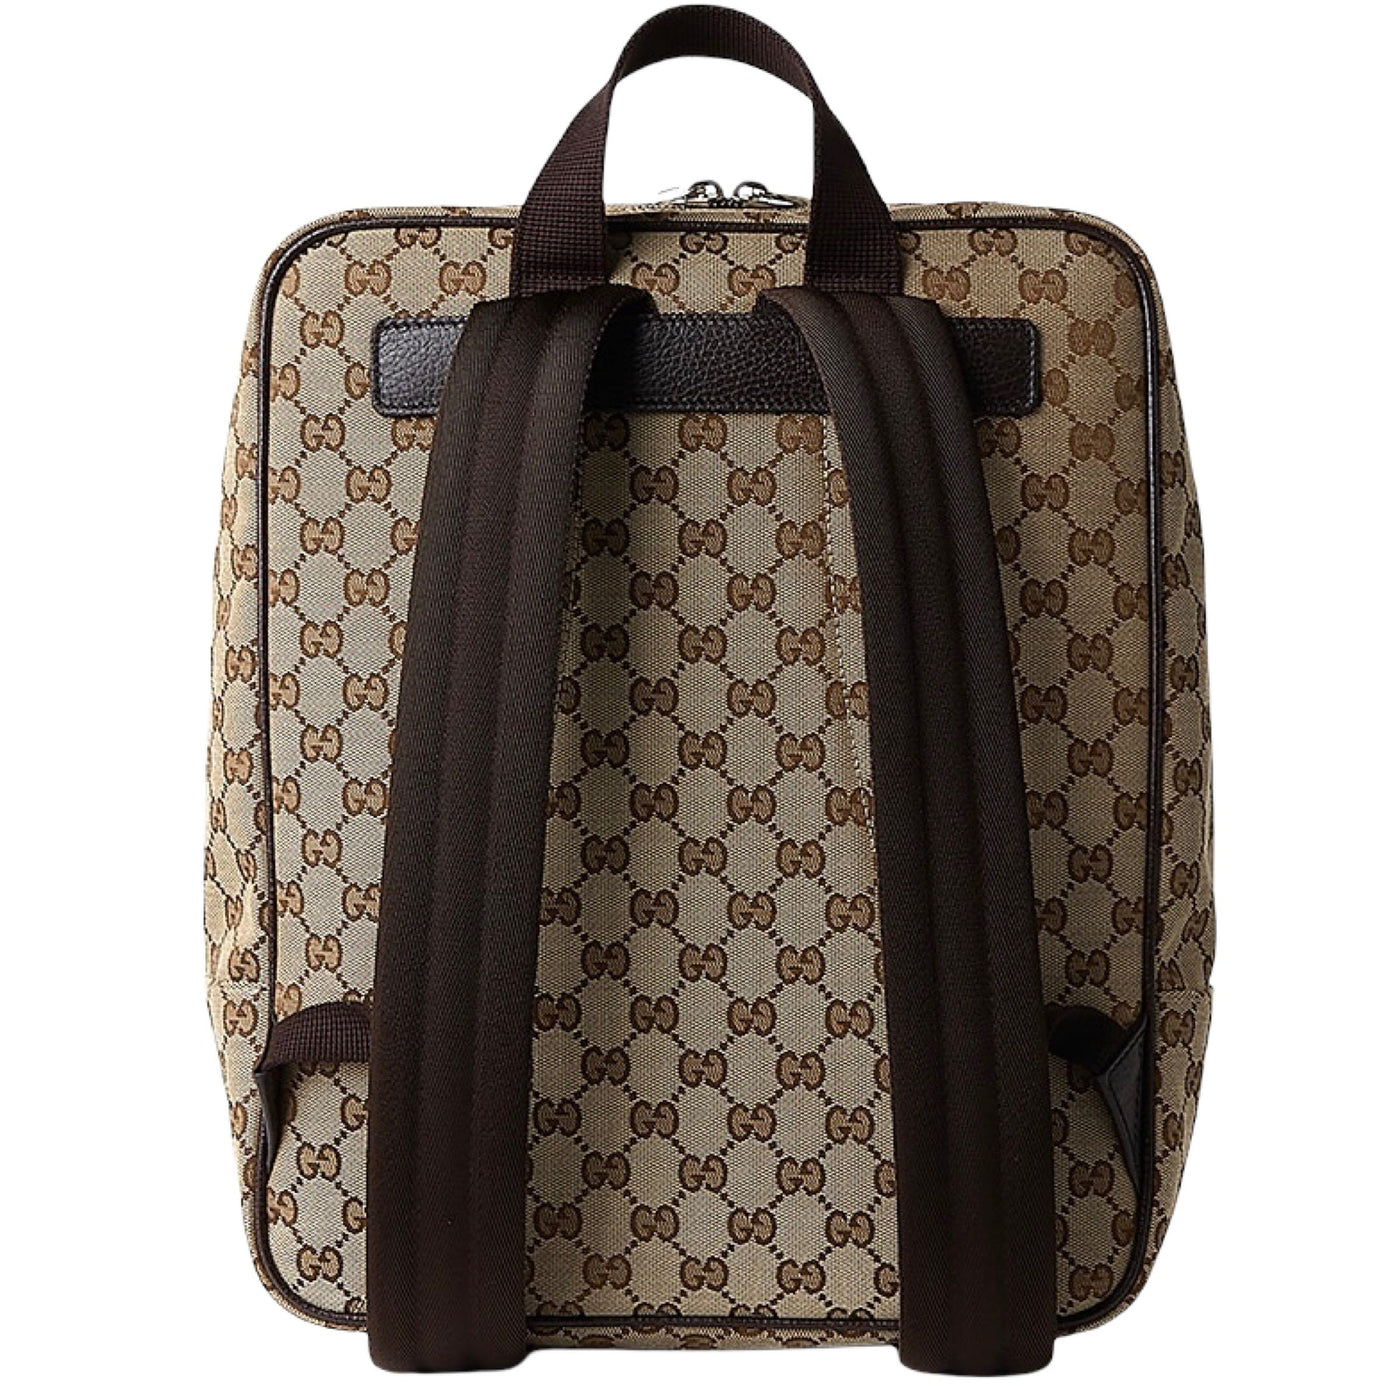 Gucci Original GG Canvas Large Backpack - LUXURYMRKT